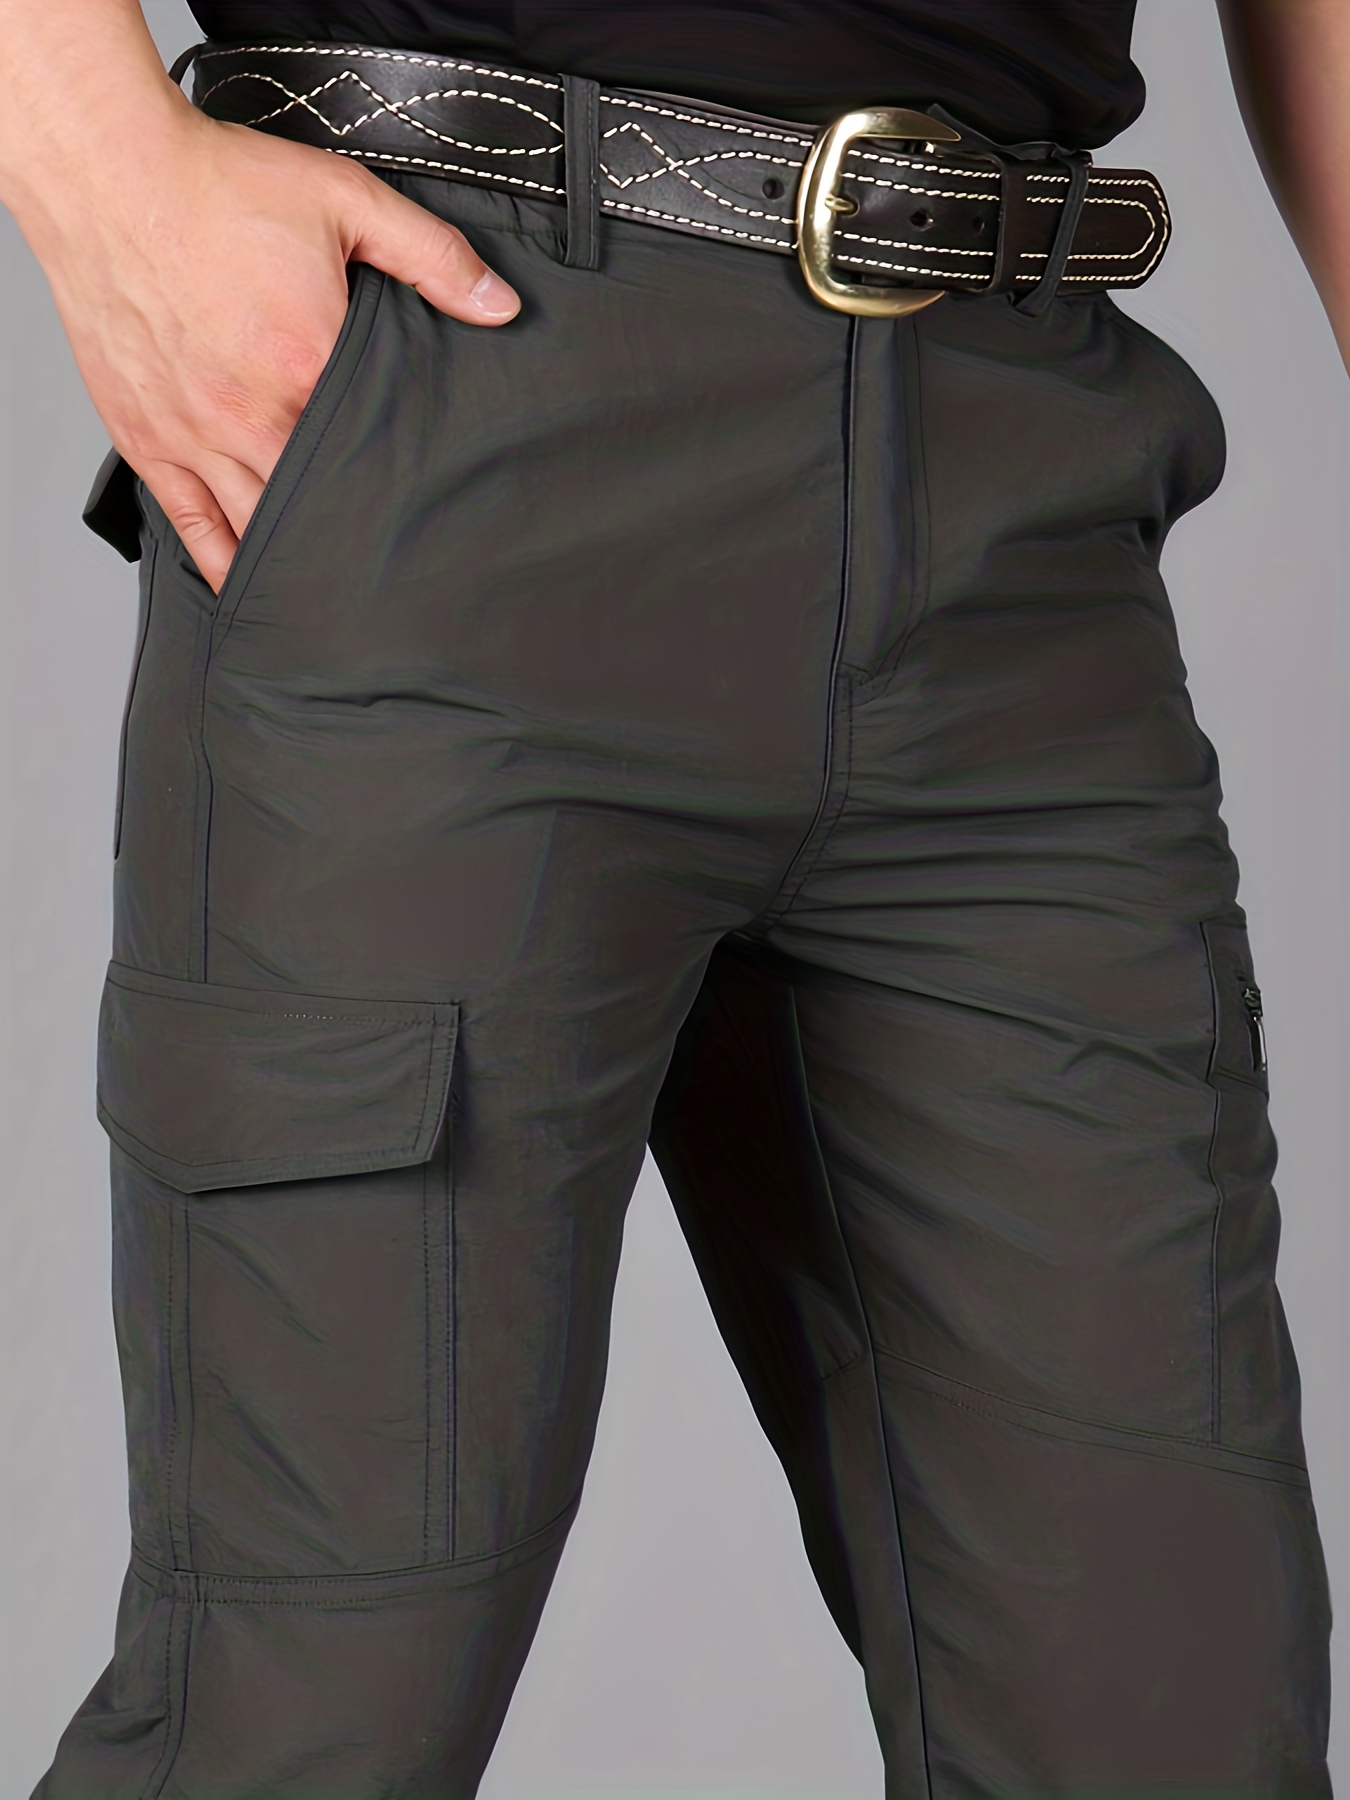  Pantalones de trabajo impermeables para hombre